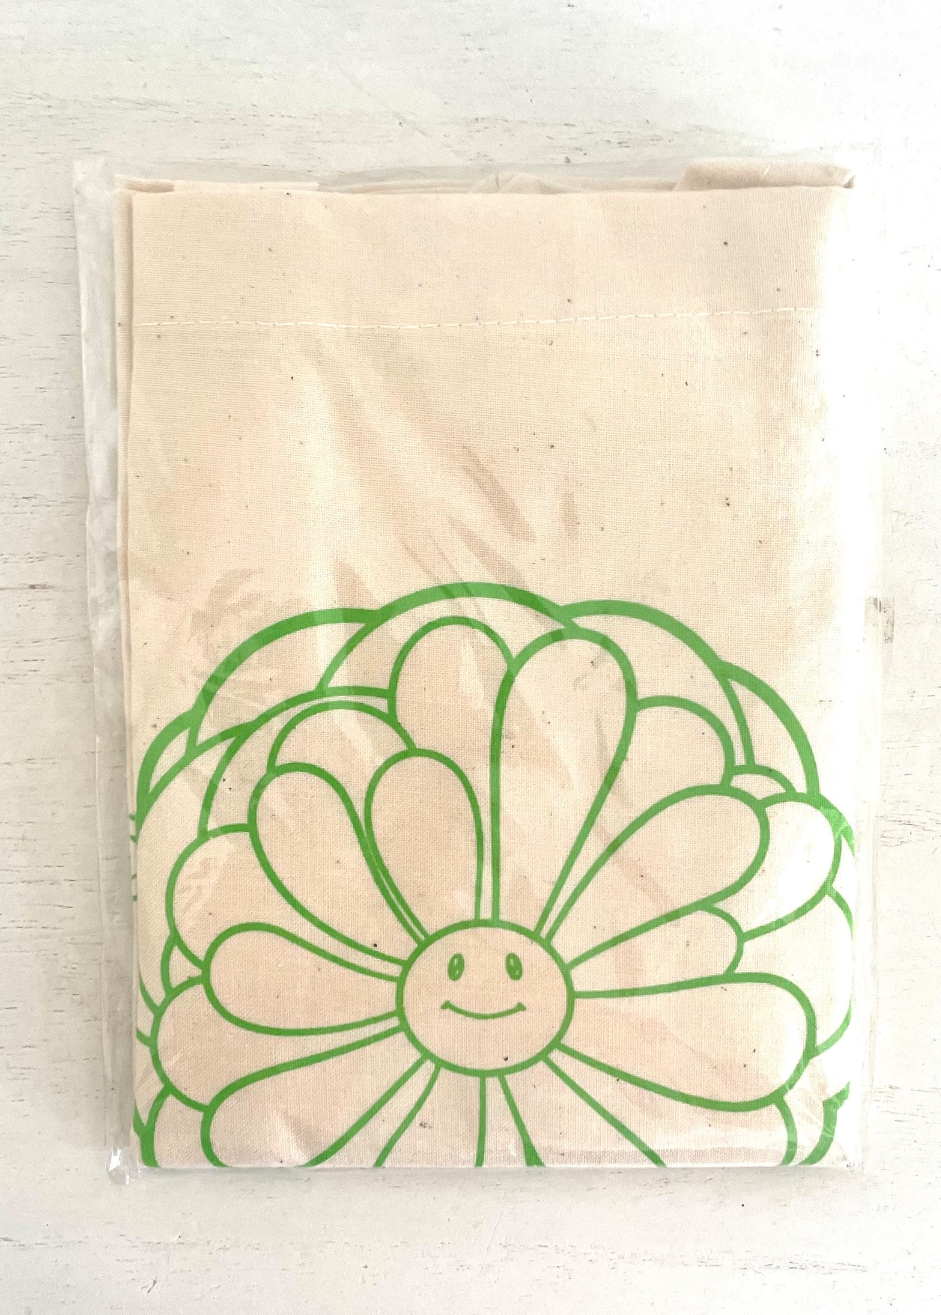 Takashi Murakami flower eco fabric tote bag